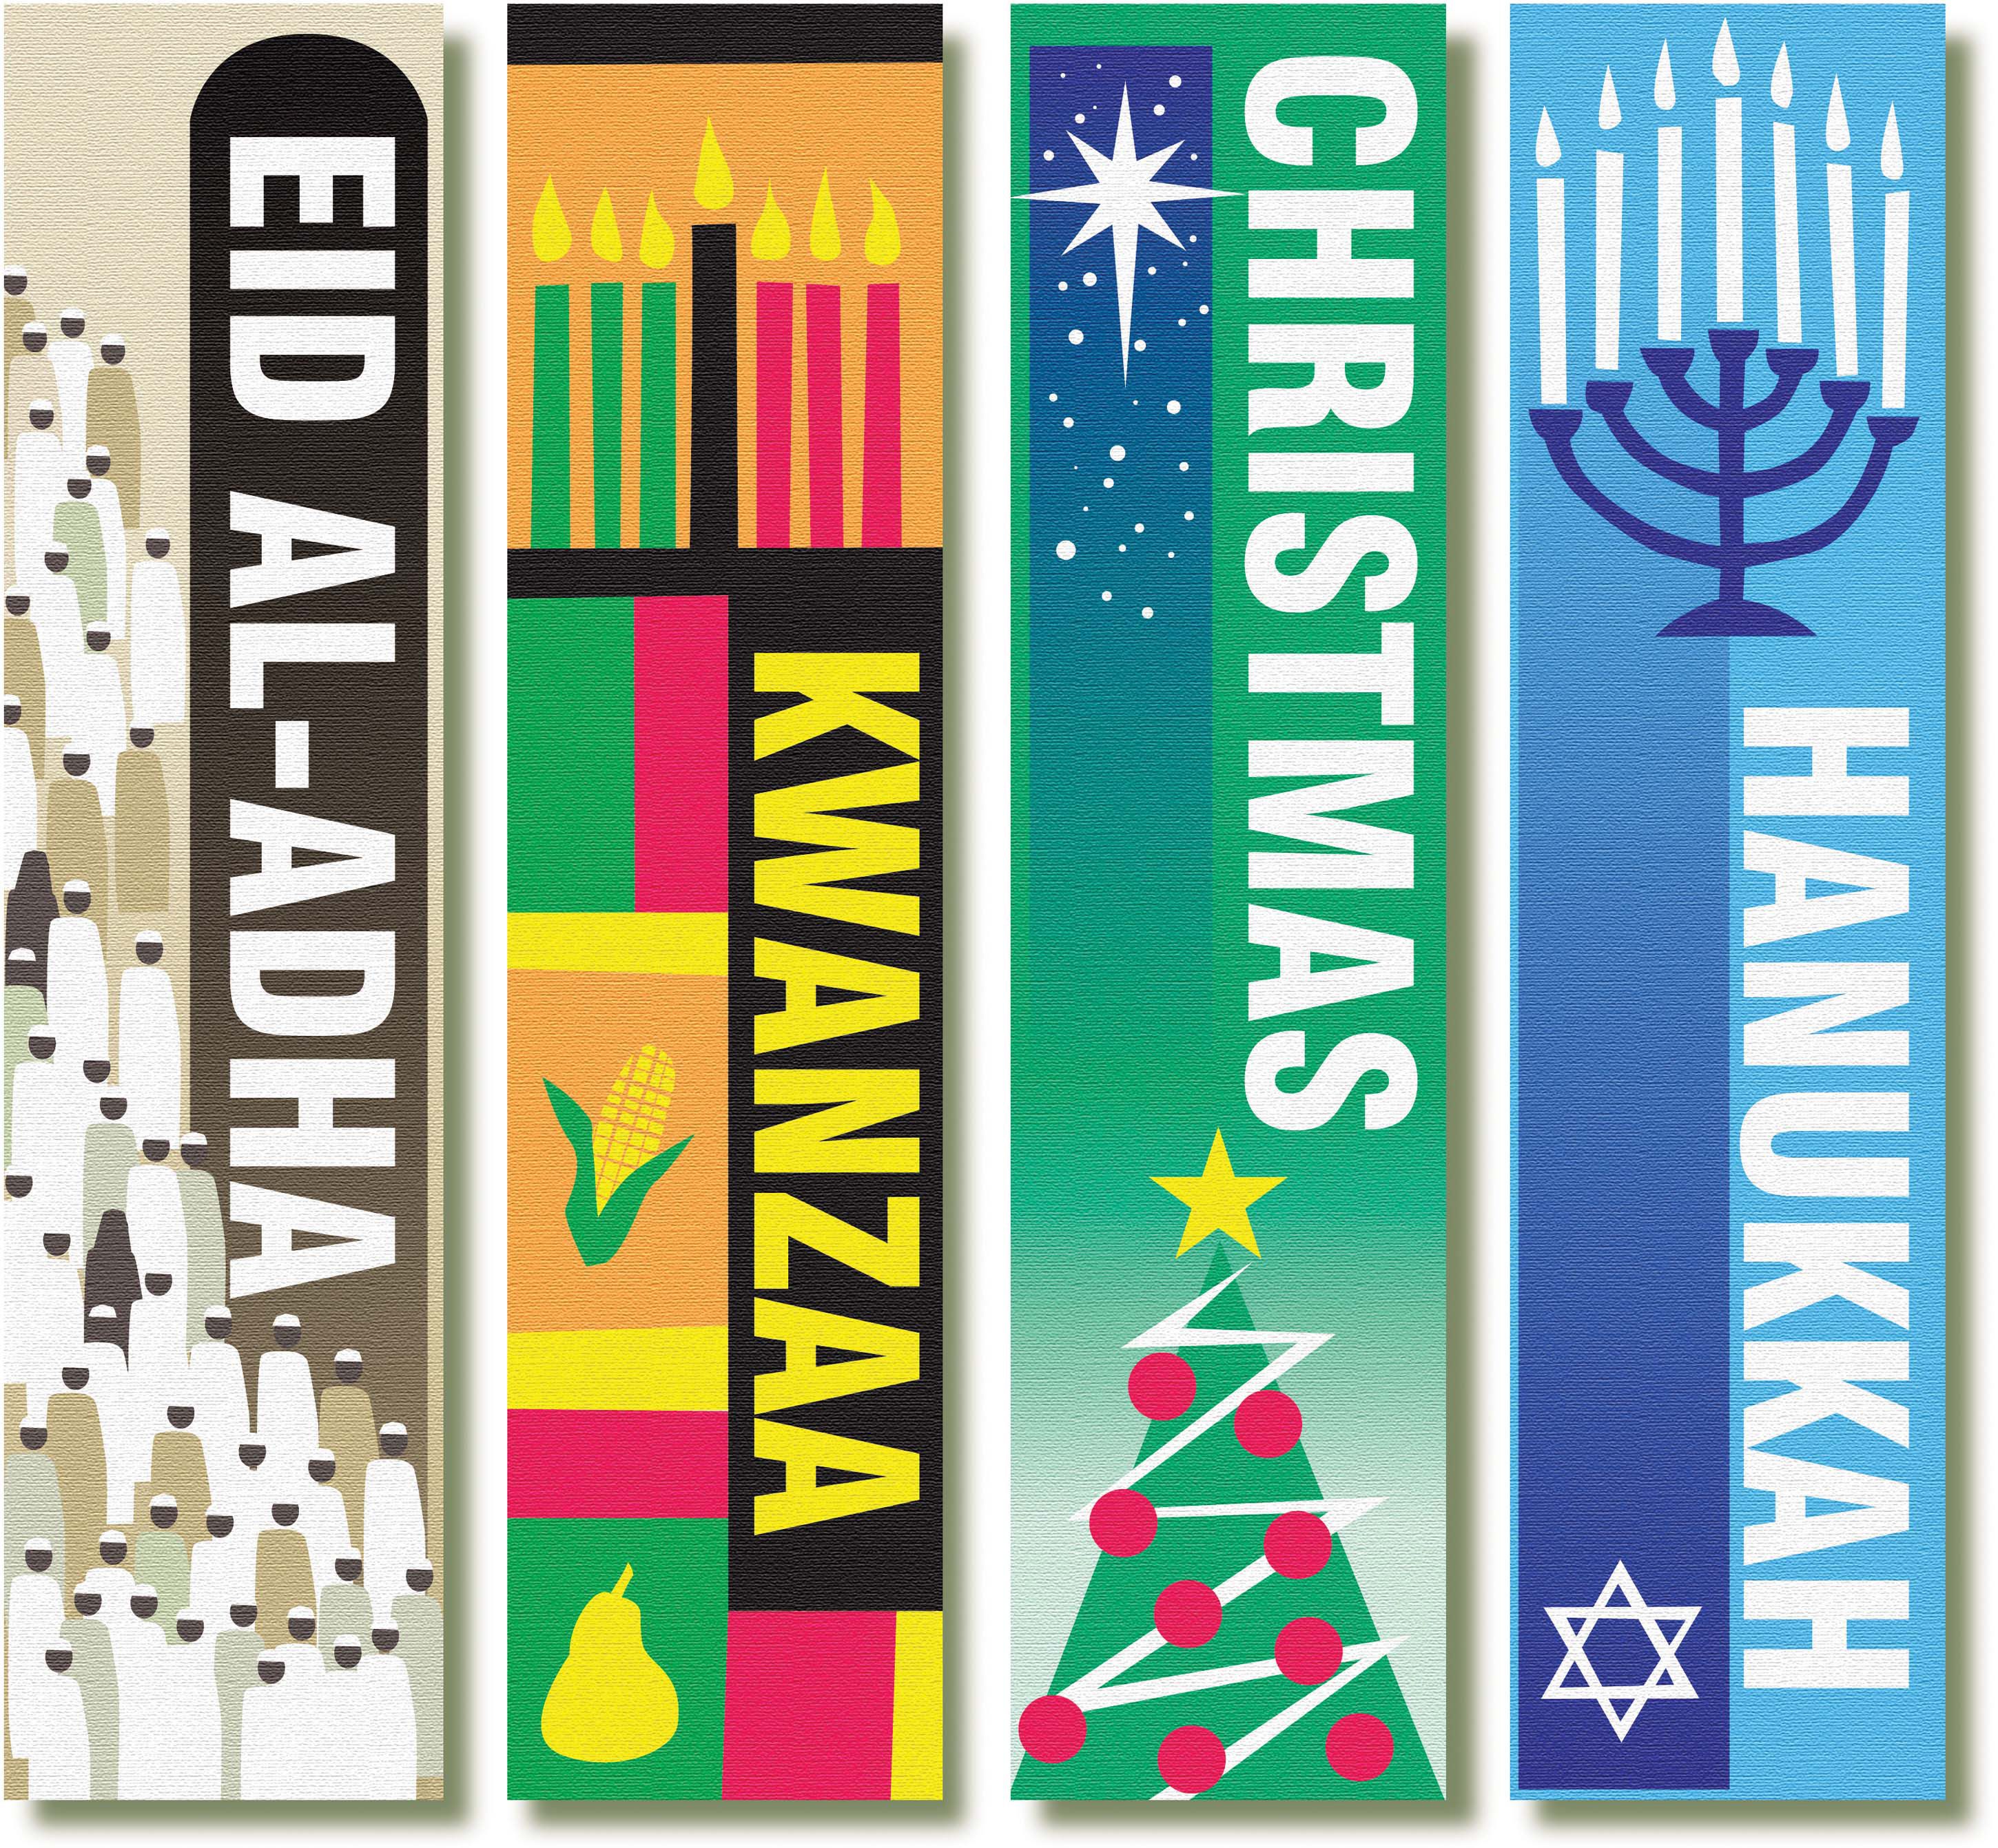 Holiday Banners from Around the World Eid Al-Adha Kwanzaa Christmas Hannukah.jpg